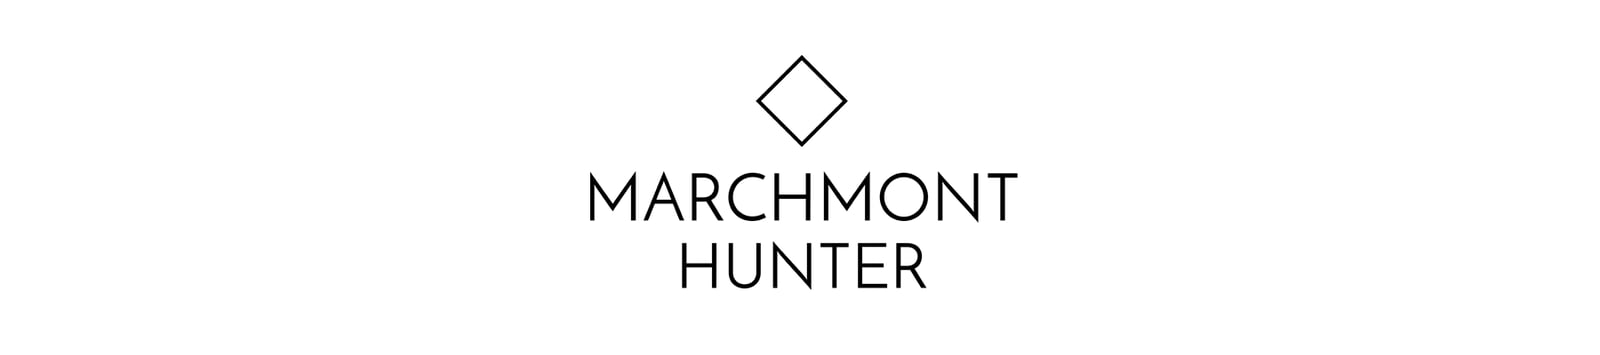 Marchmont Hunter